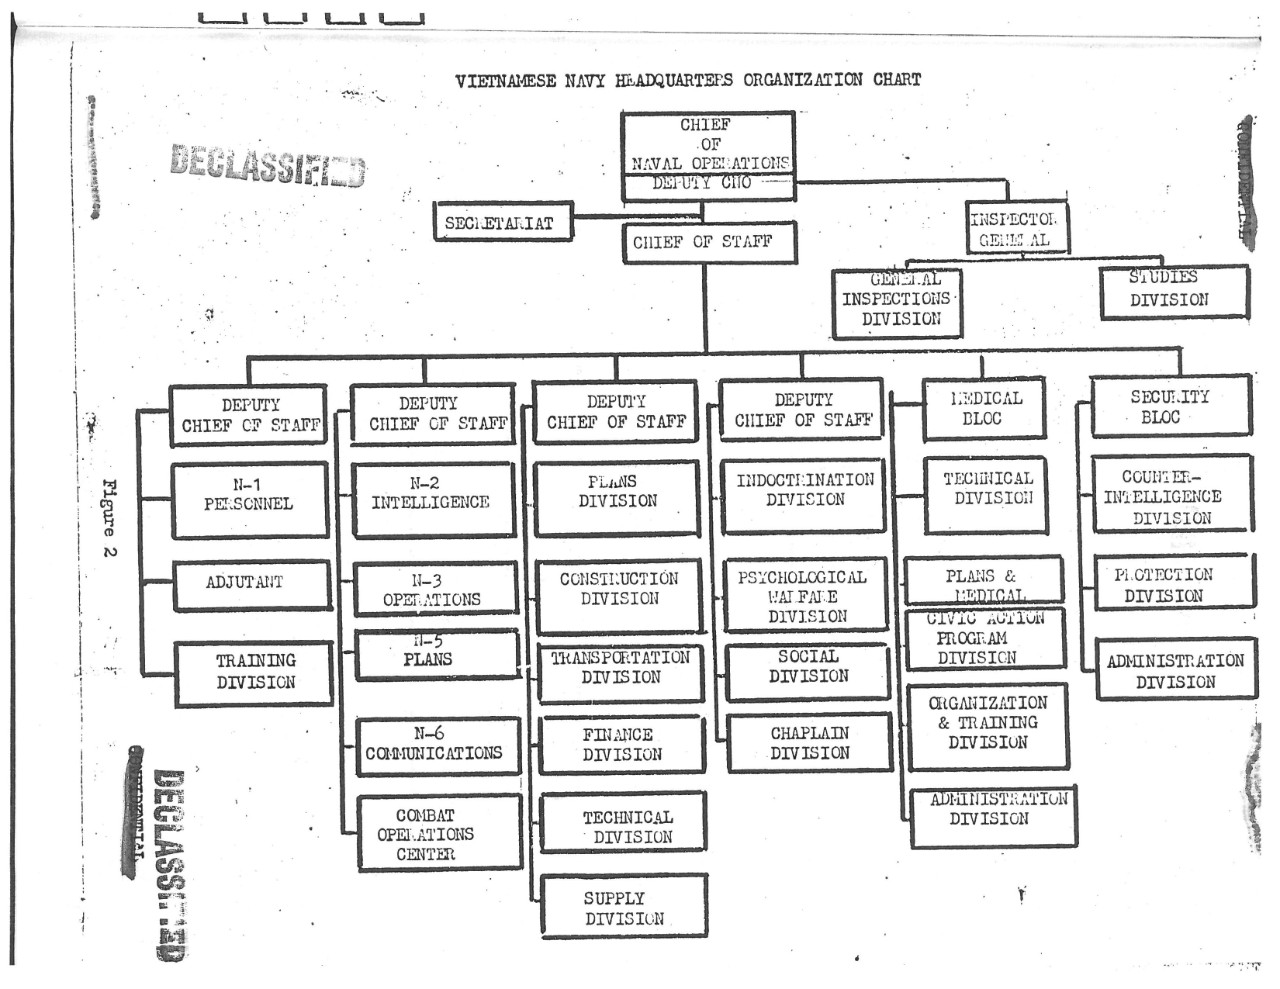 VN Organization Chart